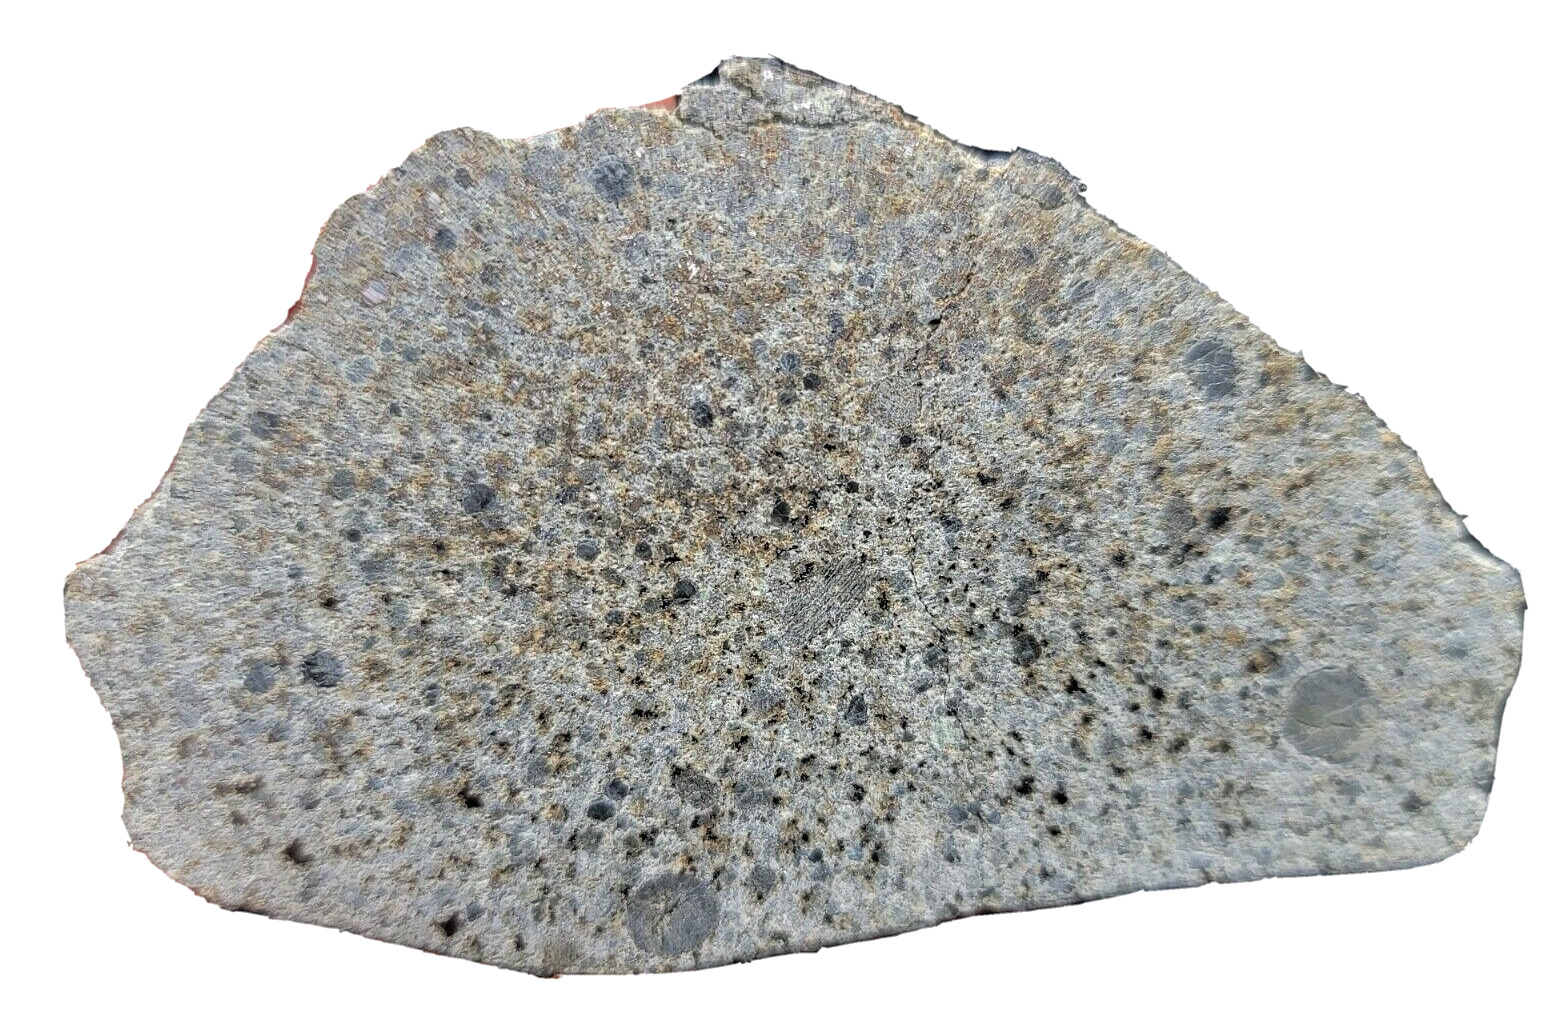 El Hassan Ould Hamed 002 (108.54g) Meteorite, Crusted End Cut, IMCA#6236